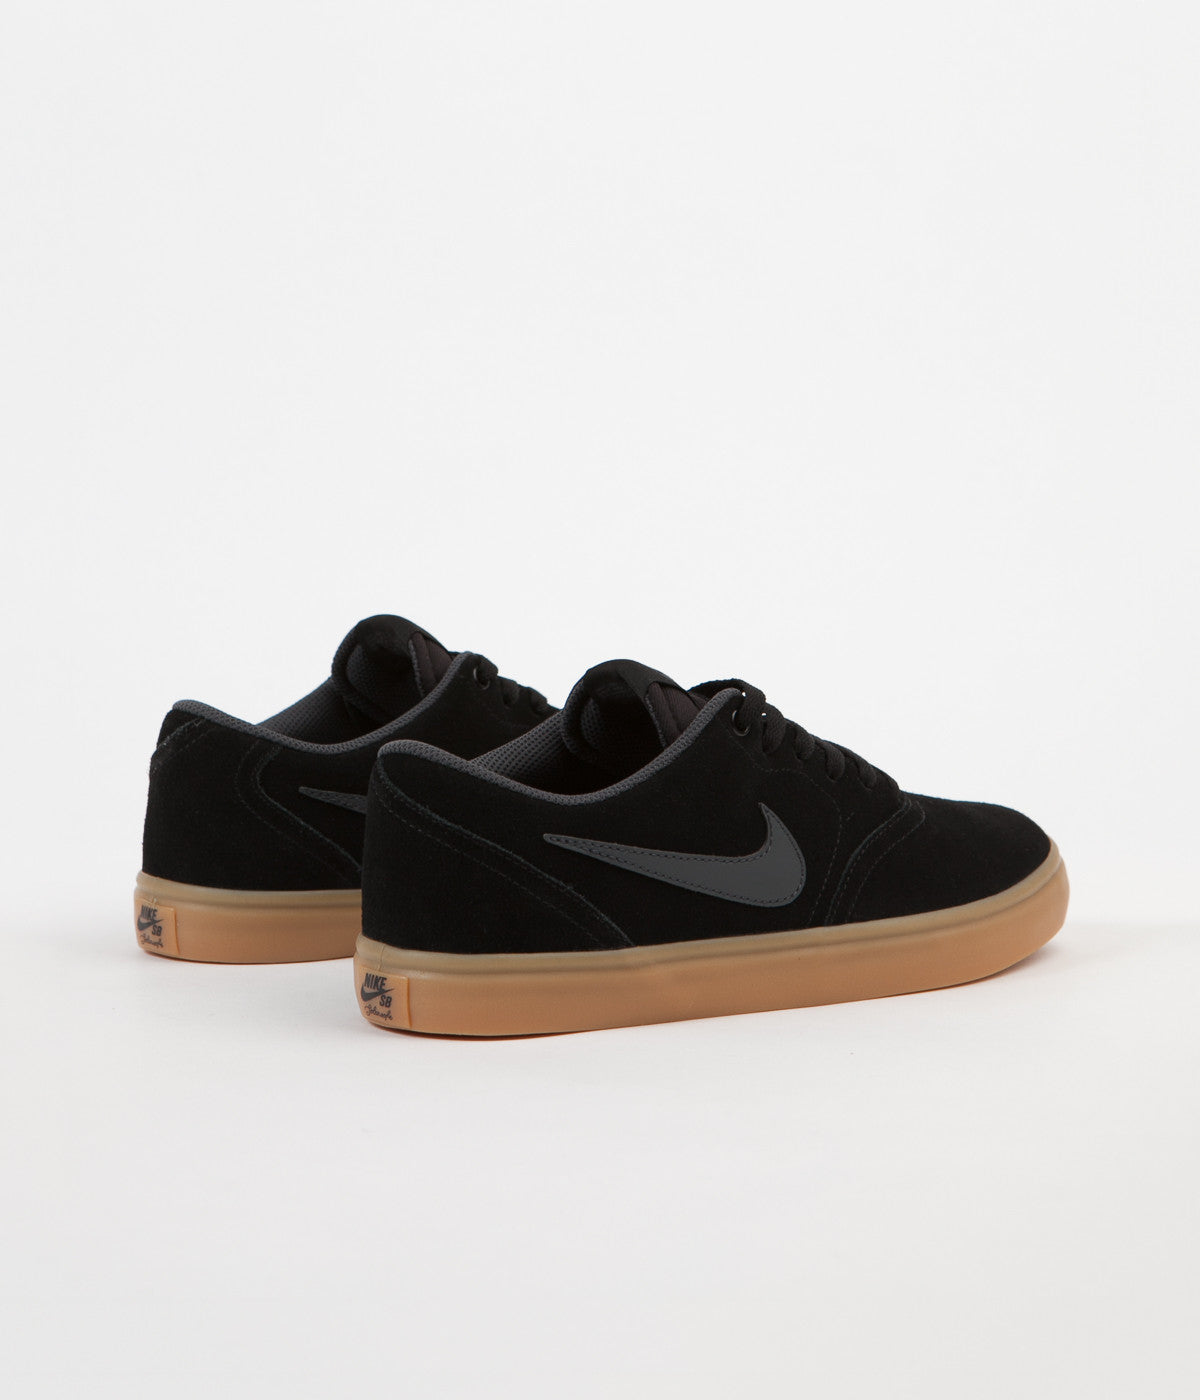 Nike SB Check Shoes - Black / Anthracite - Gum Dark Brown | Flatspot